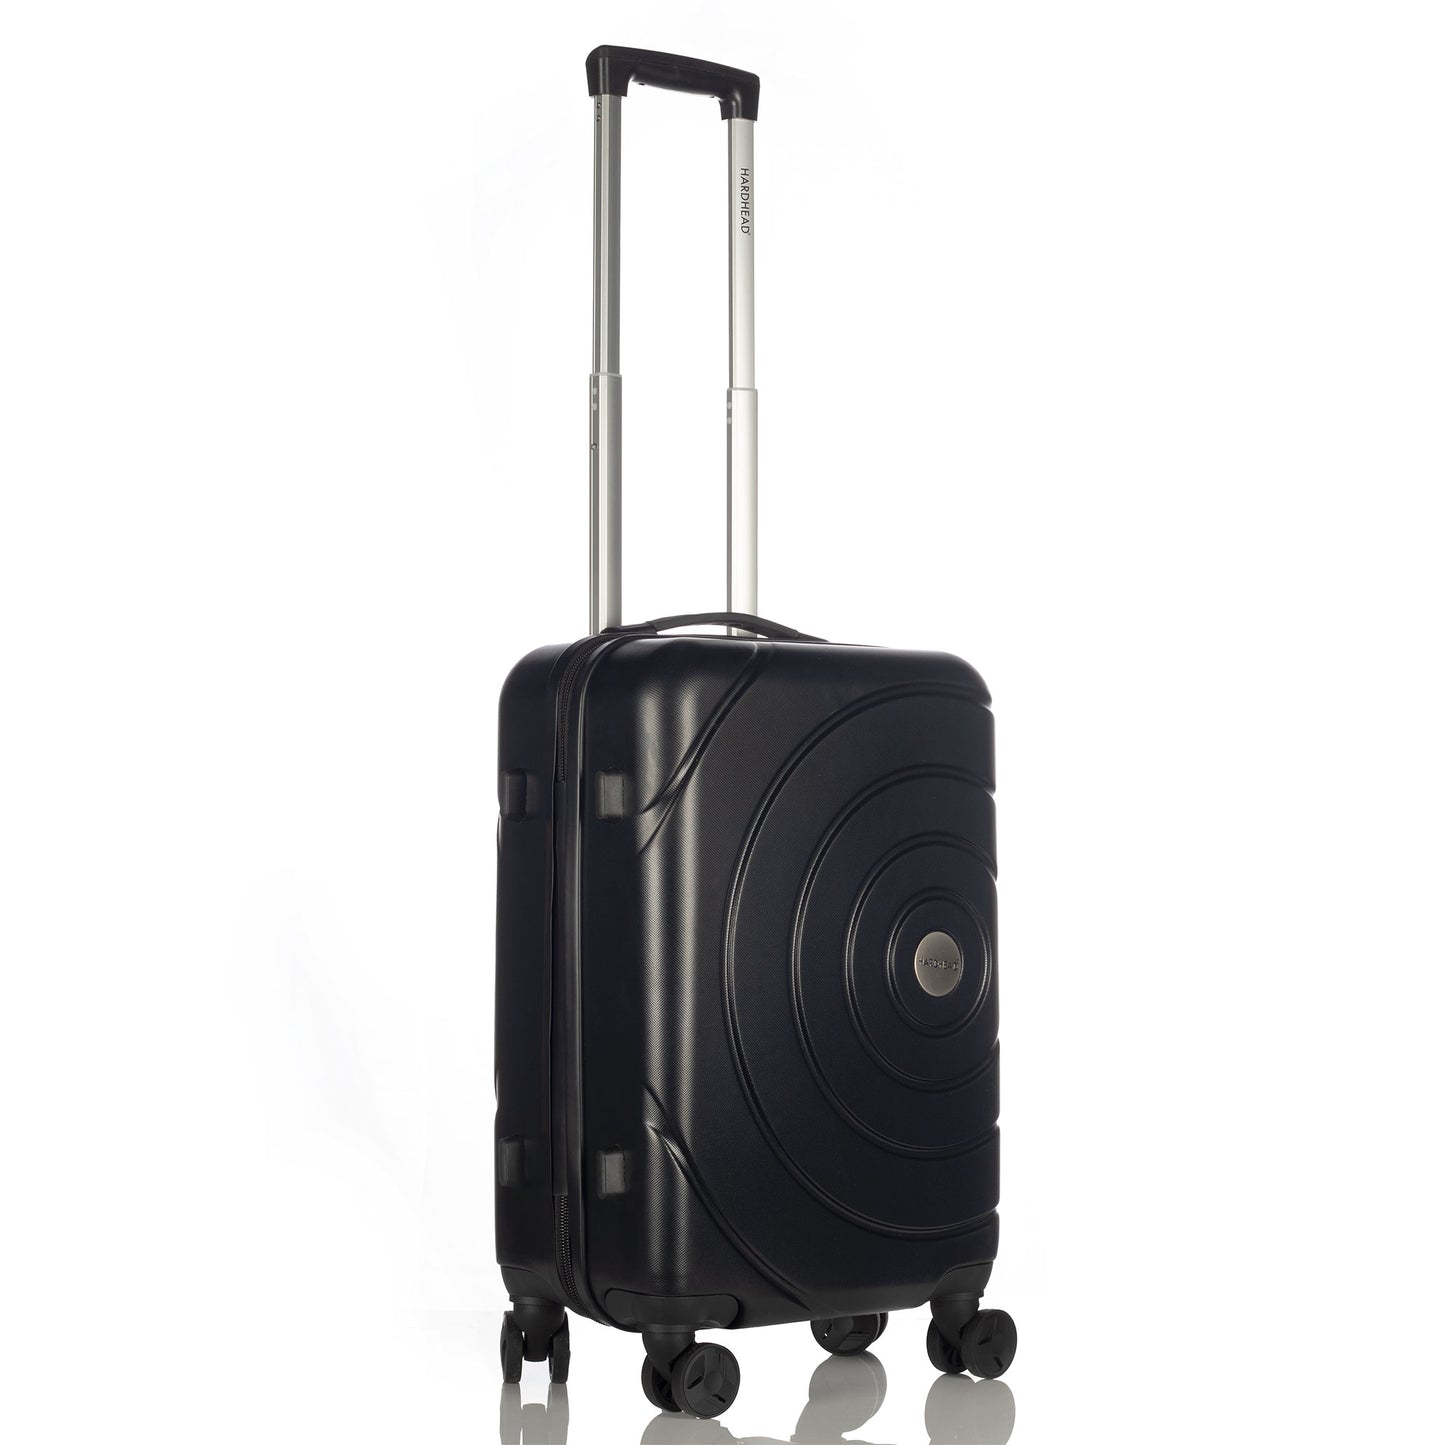 Hardhead Luggage 3 pieces set (20/24/28") Eco Hardside Travel Suitcase with 4 360 Wheels Lock Included, Black